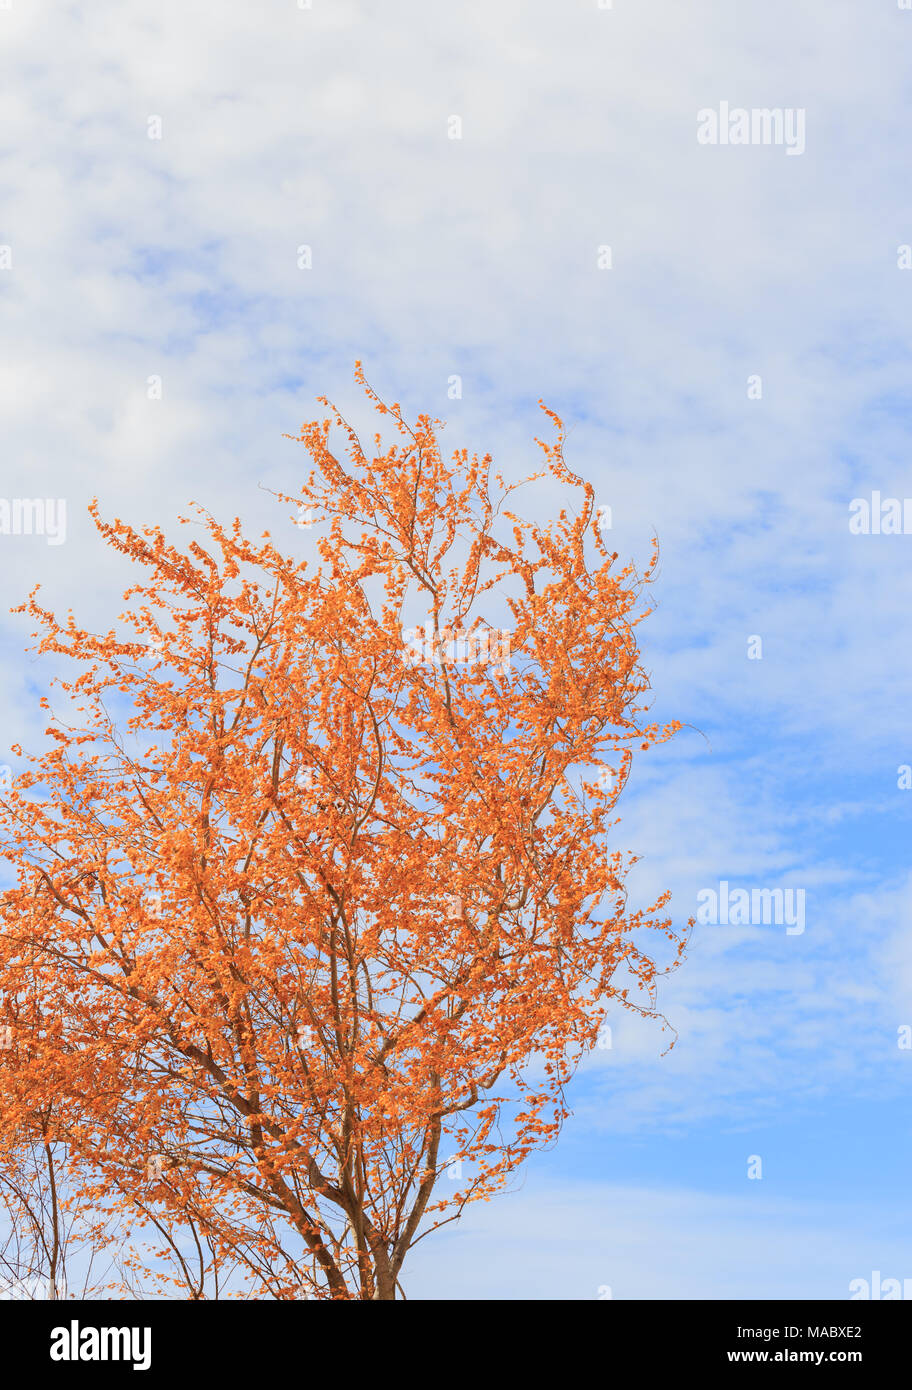 Orange Leaves From Manila Tamarind Tree In Blue Sky Background Stock Photo Alamy